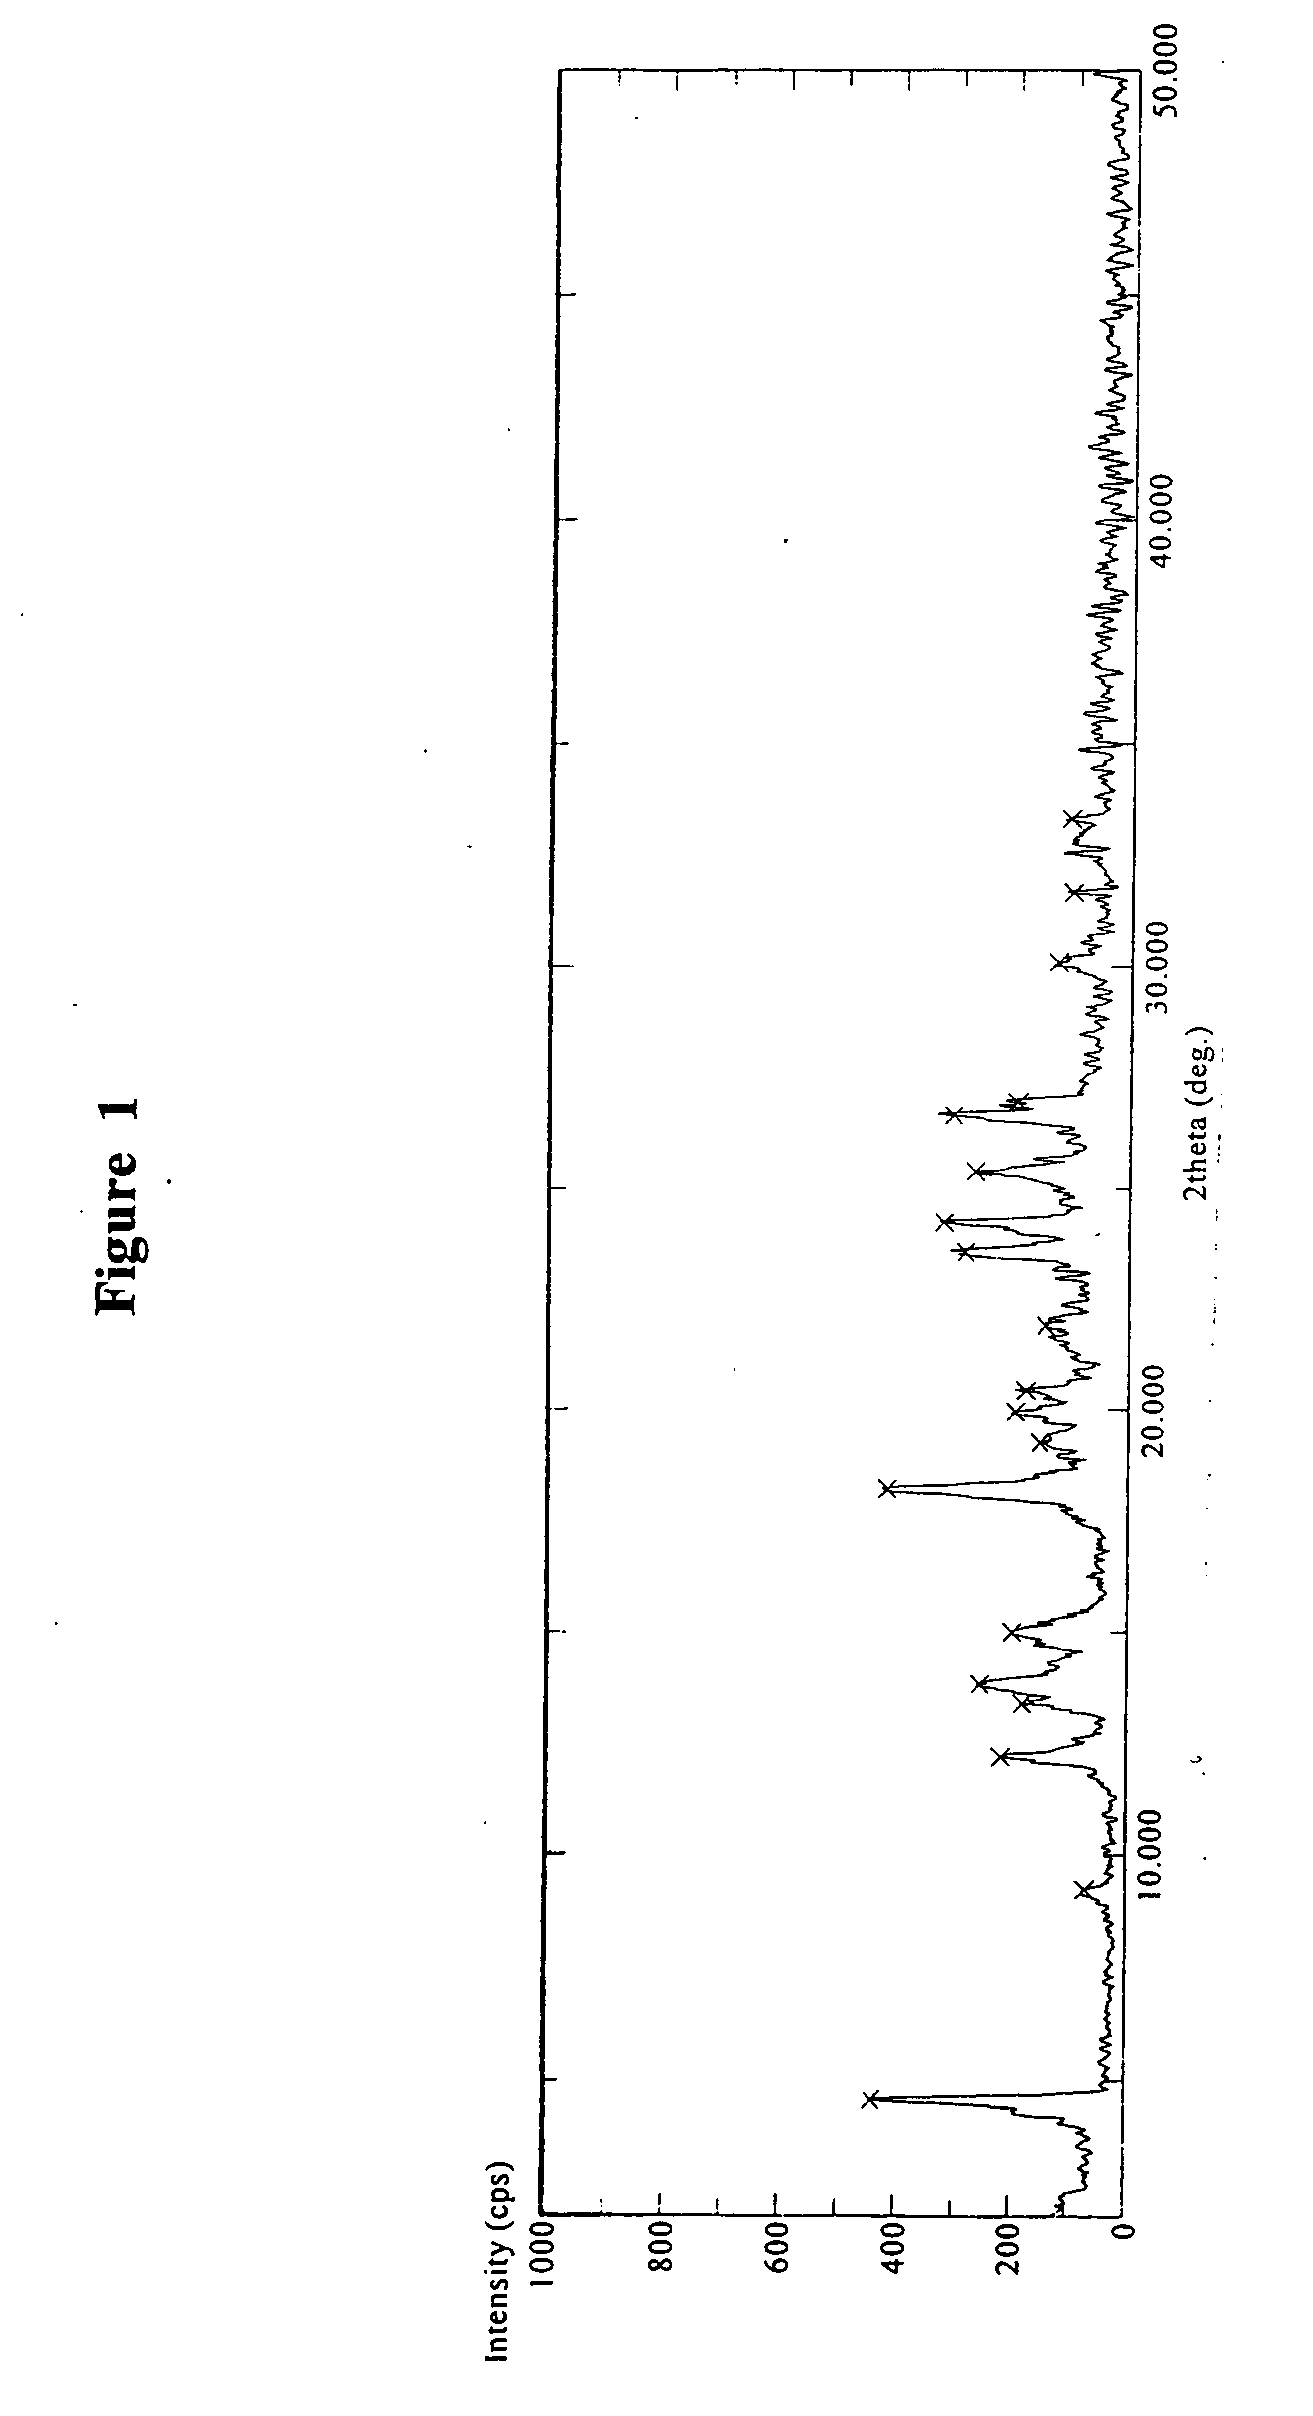 Crystalline polymorph of sitagliptin phosphate and its preparation